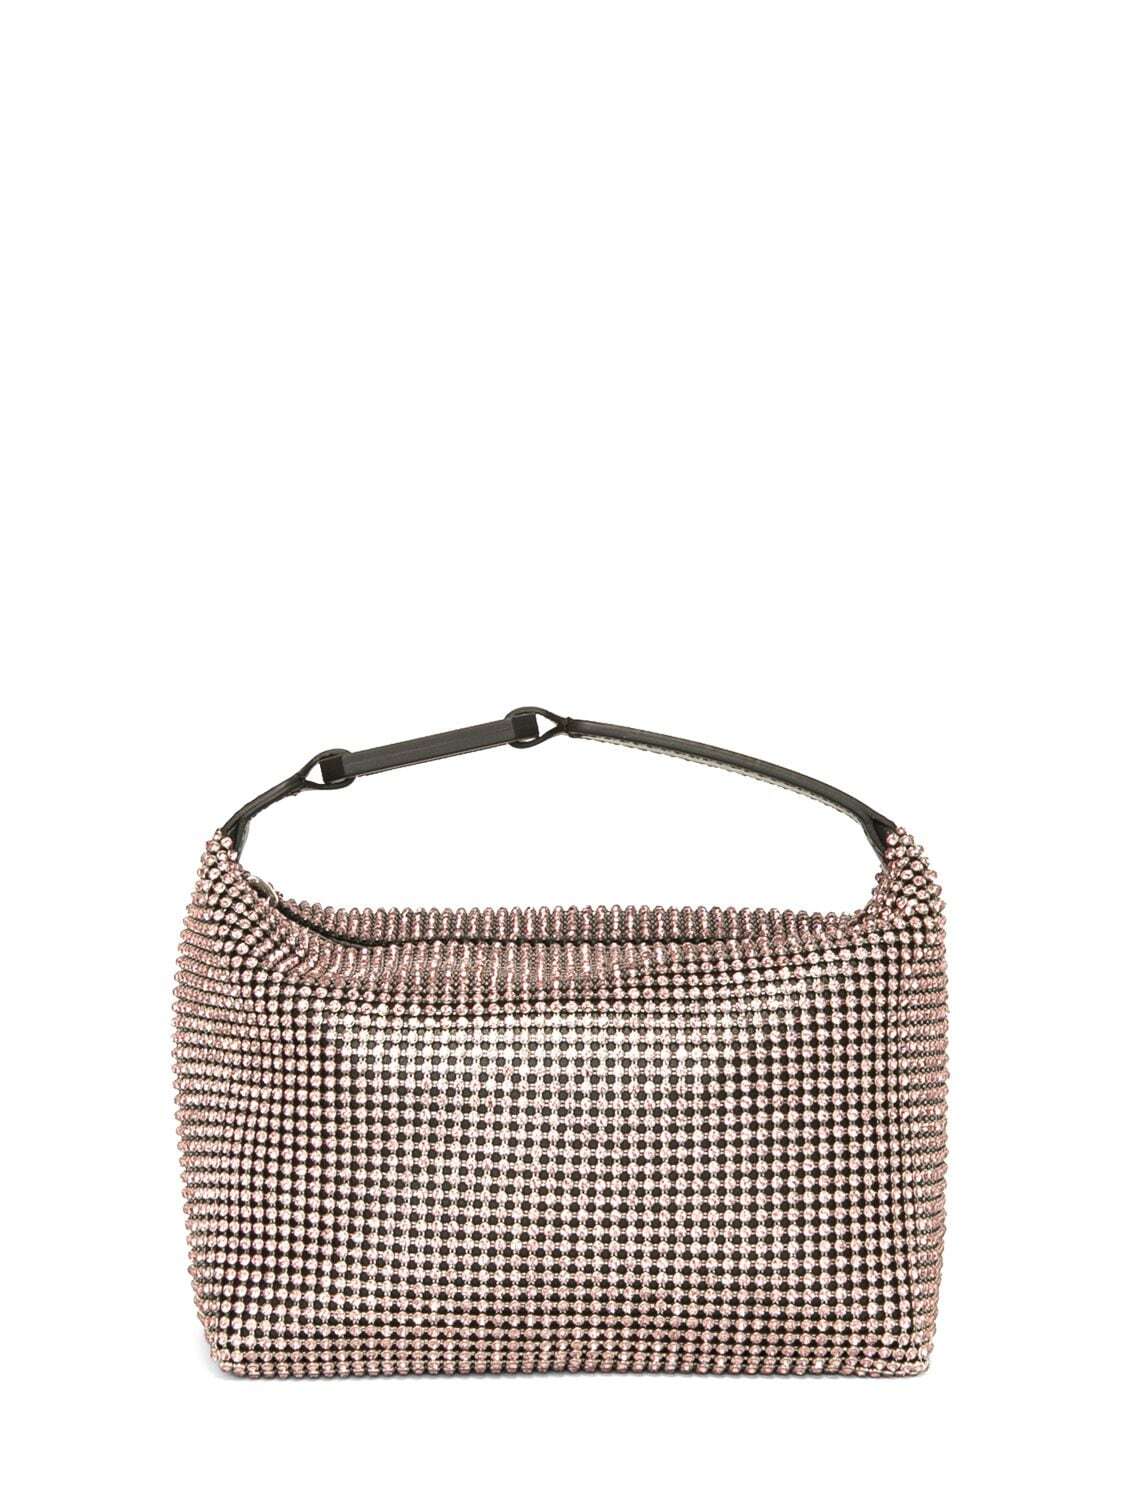 EÉRA Moon Leather & Crystal Top Handle Bag in pink